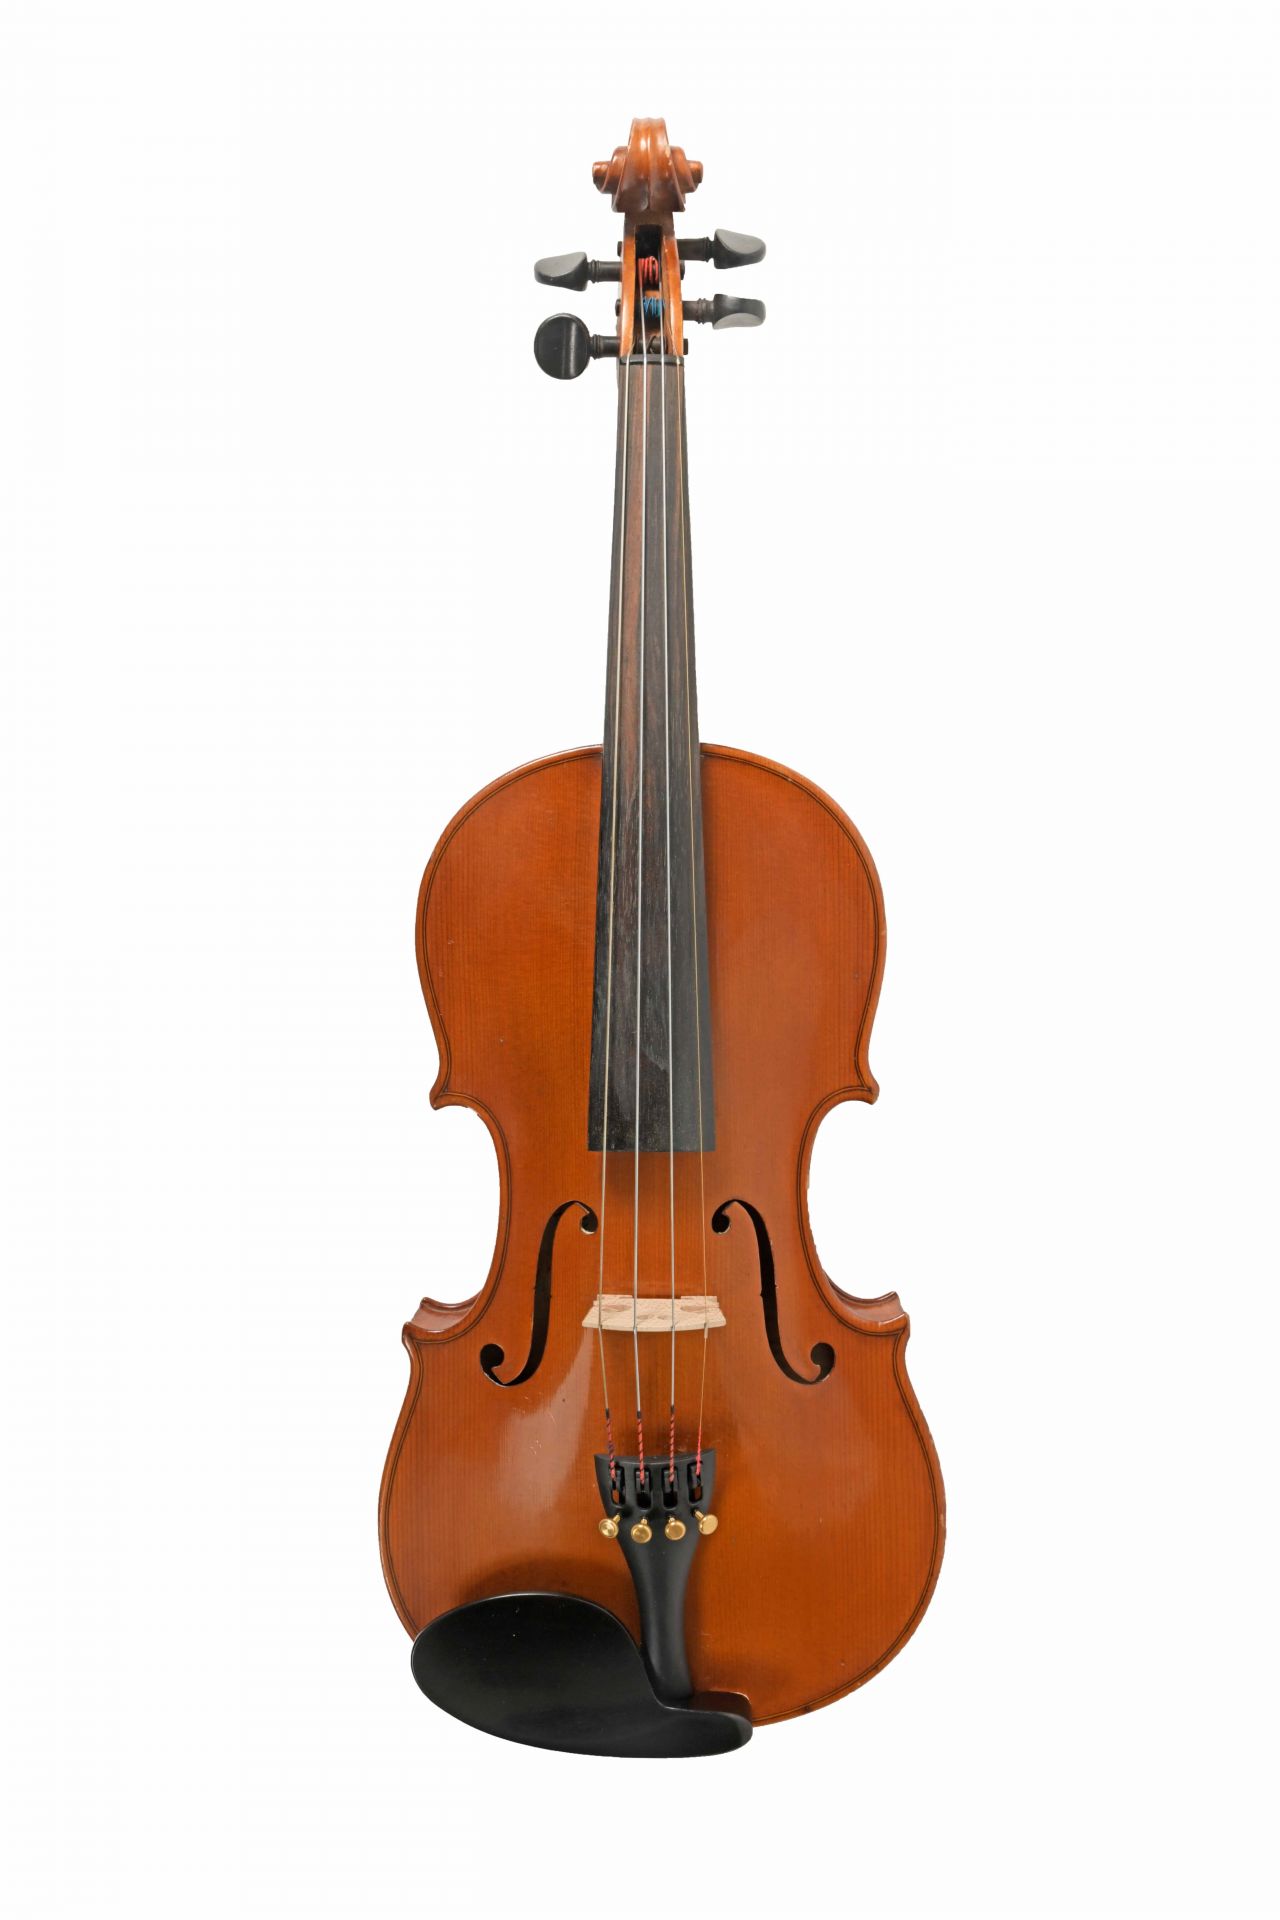 Antonio Lechi violin